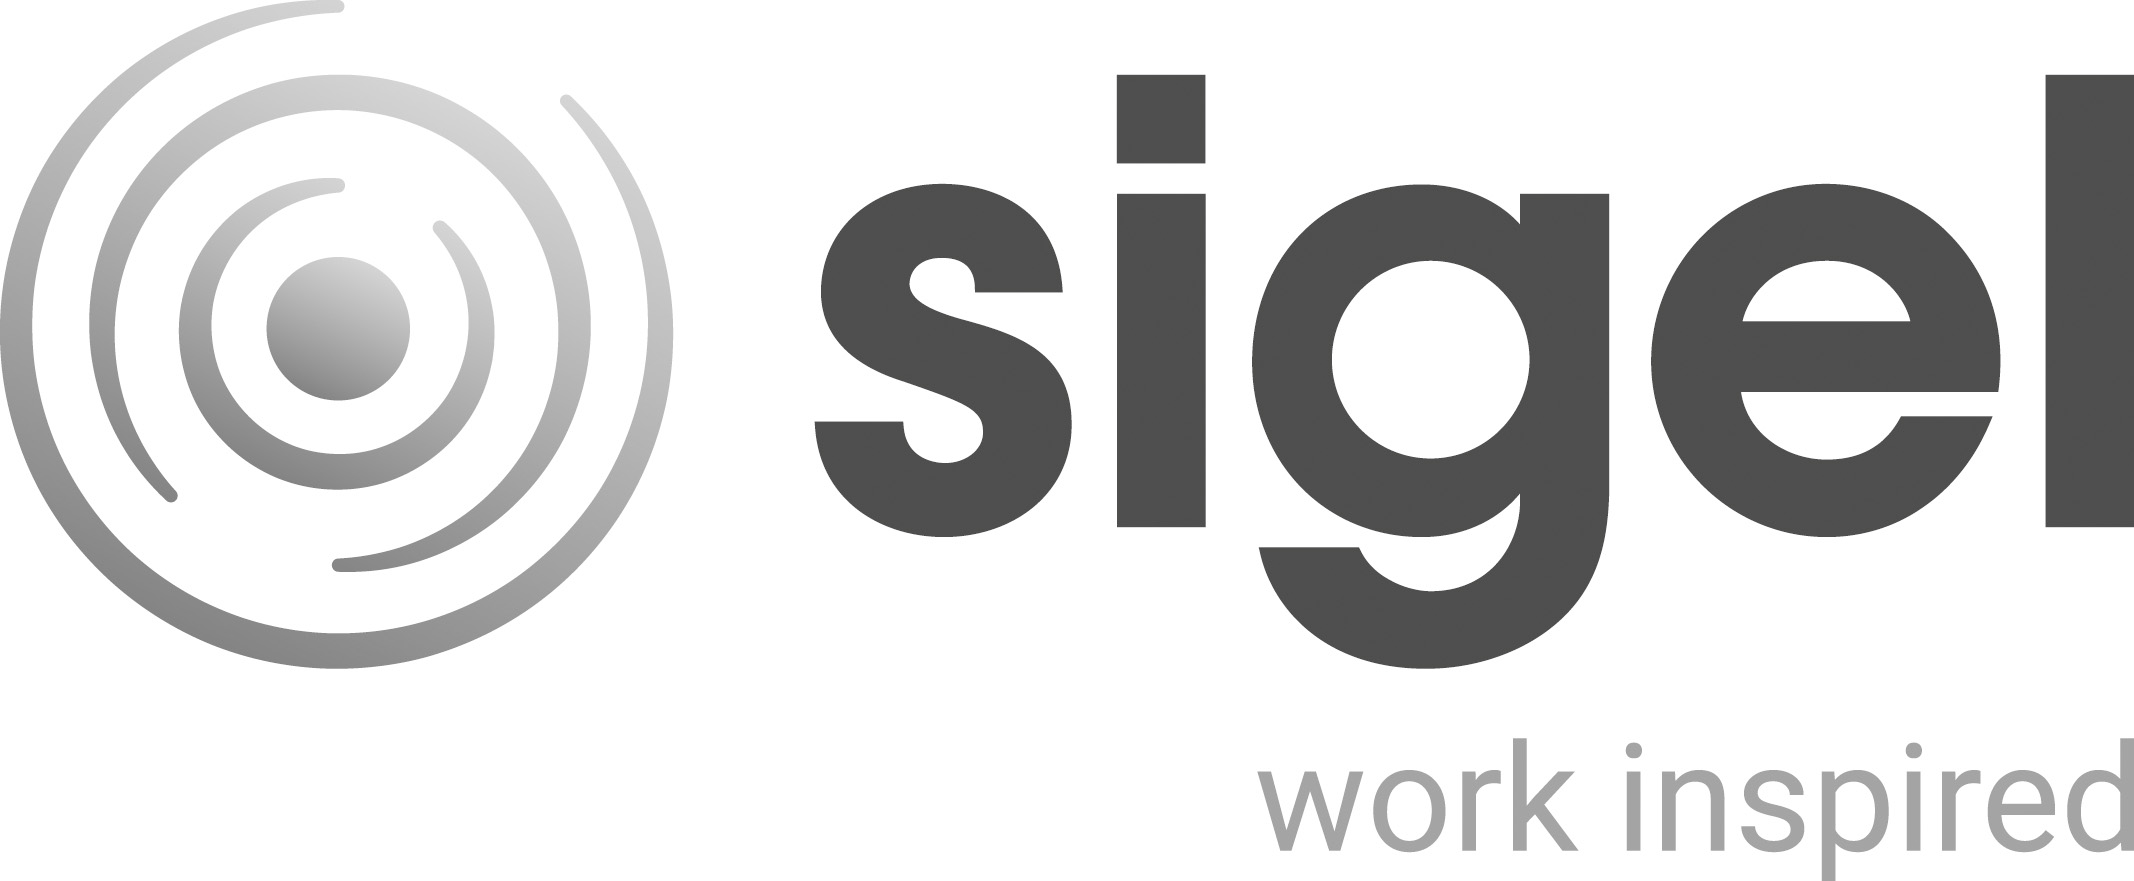 Logo de marque Sigel